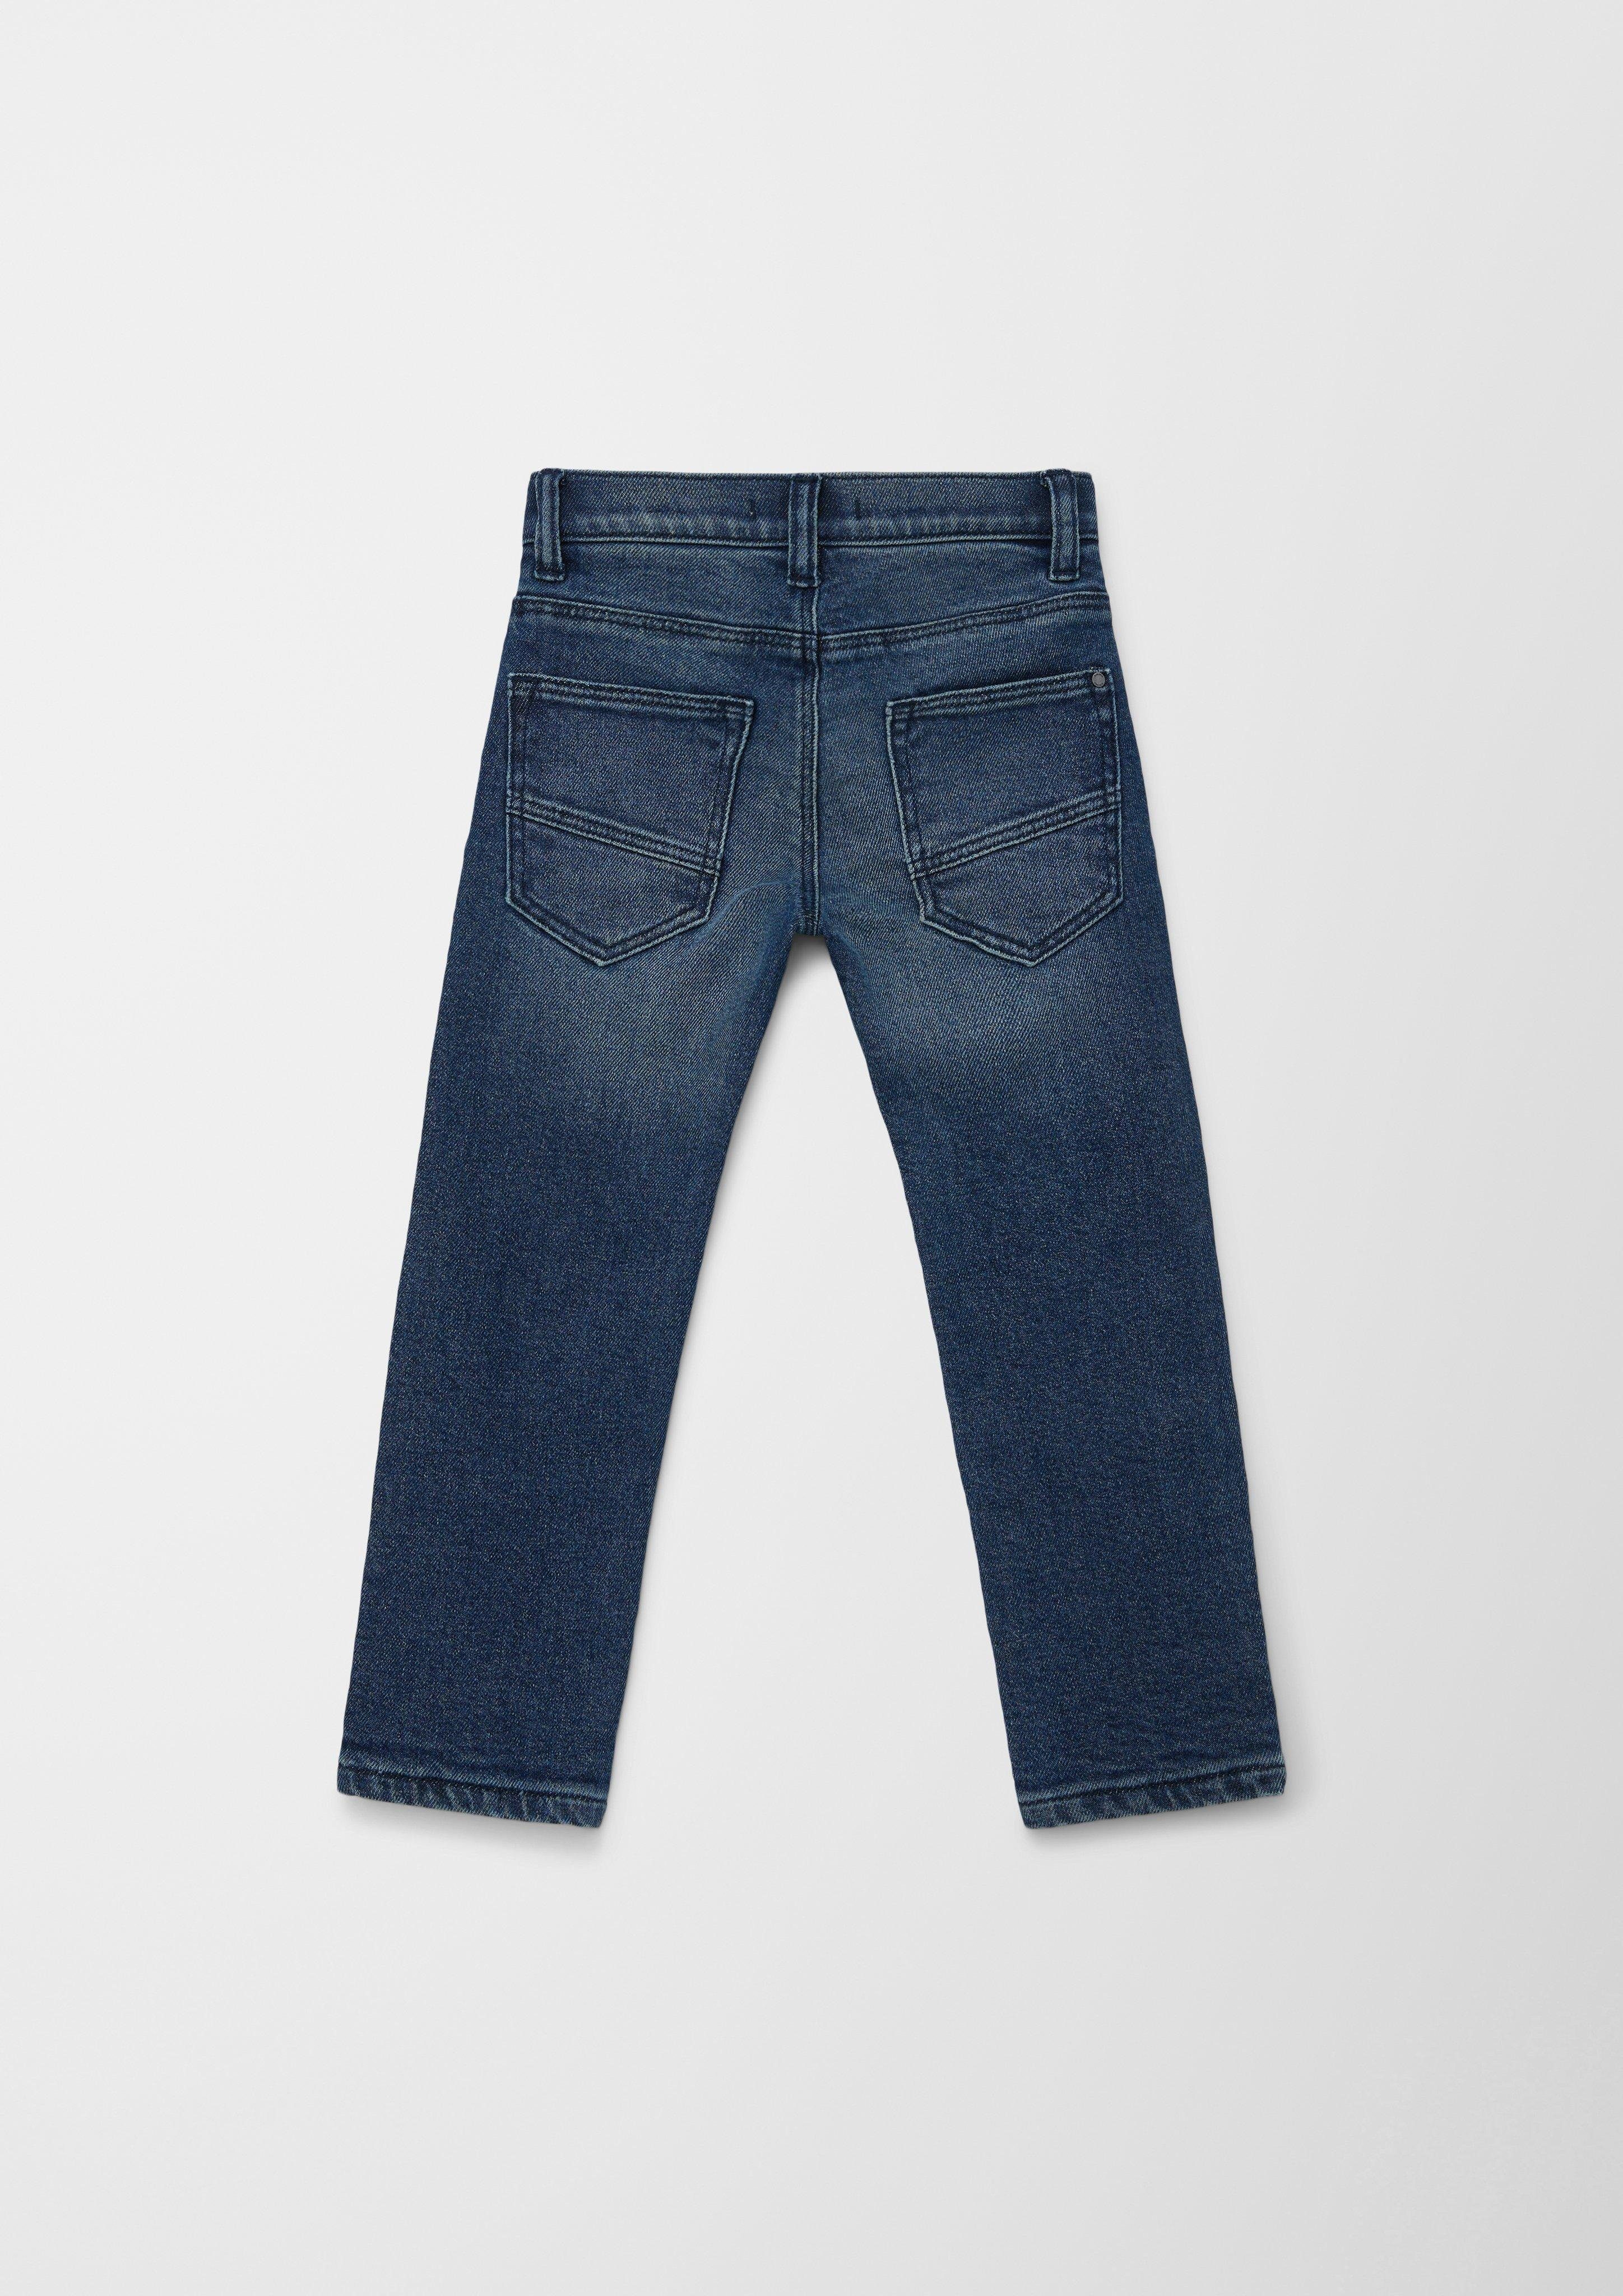 Mid s.Oliver Pelle / 5-Pocket-Jeans Waschung Regular Jeans Rise Fit / Straight / Leg Gefütterte